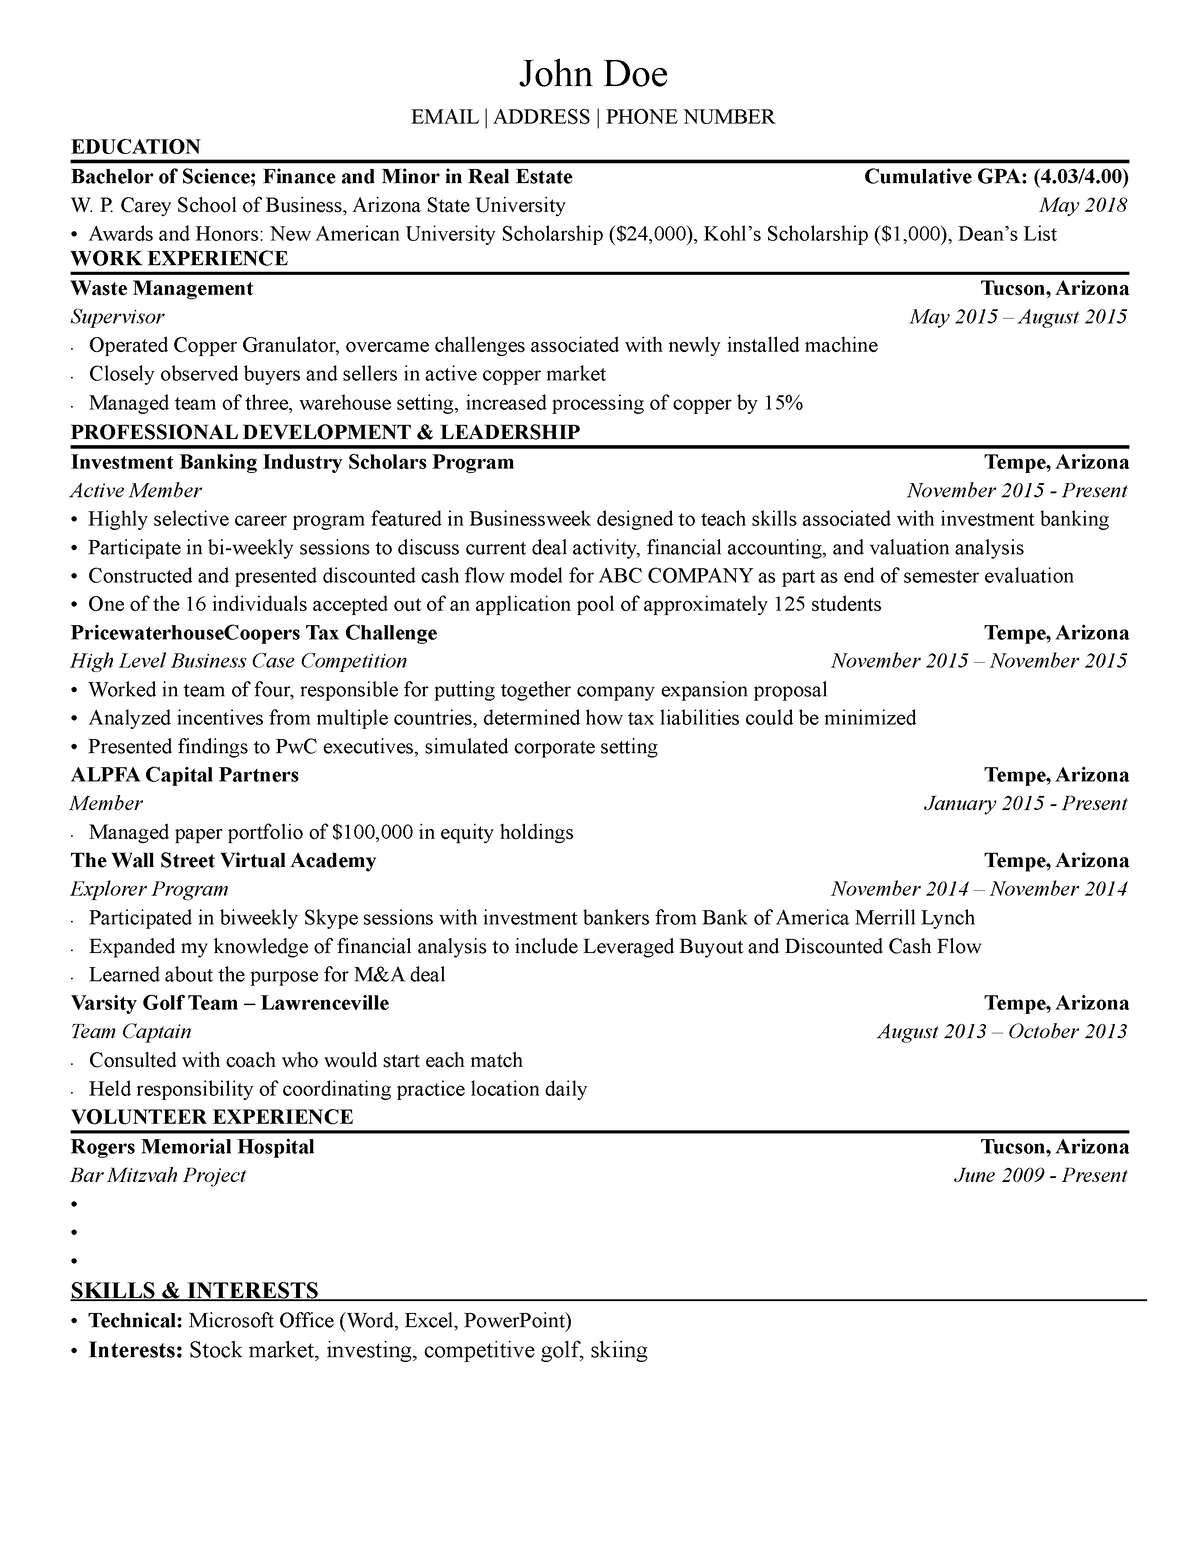 Resume+Template WP Carey Resume Template MGT 300 ASU Studocu